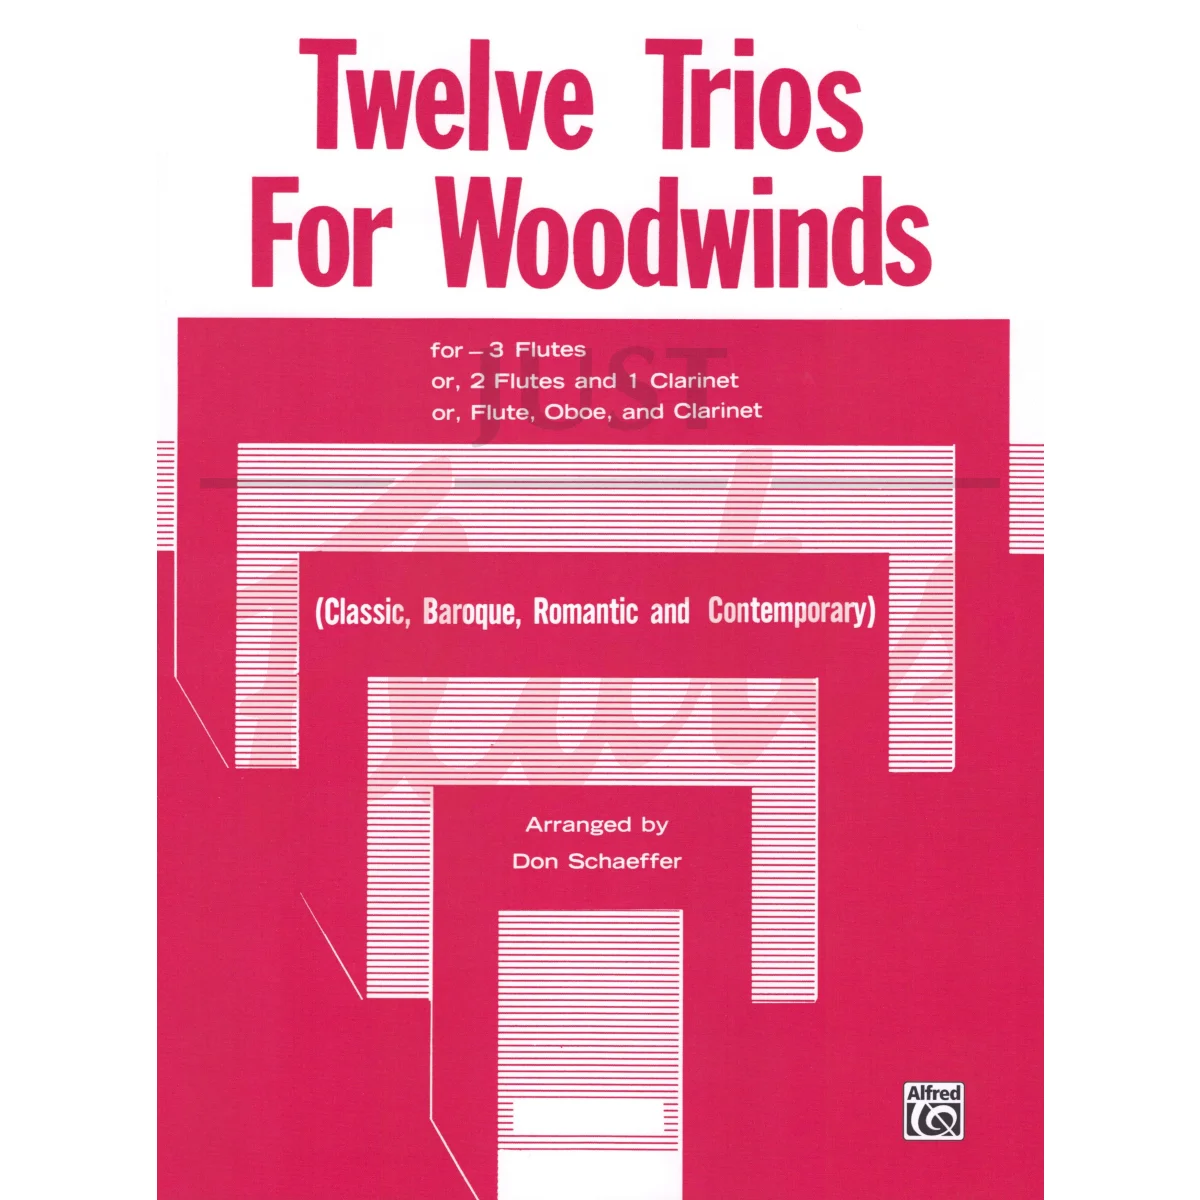 Twelve Trios for Woodwinds